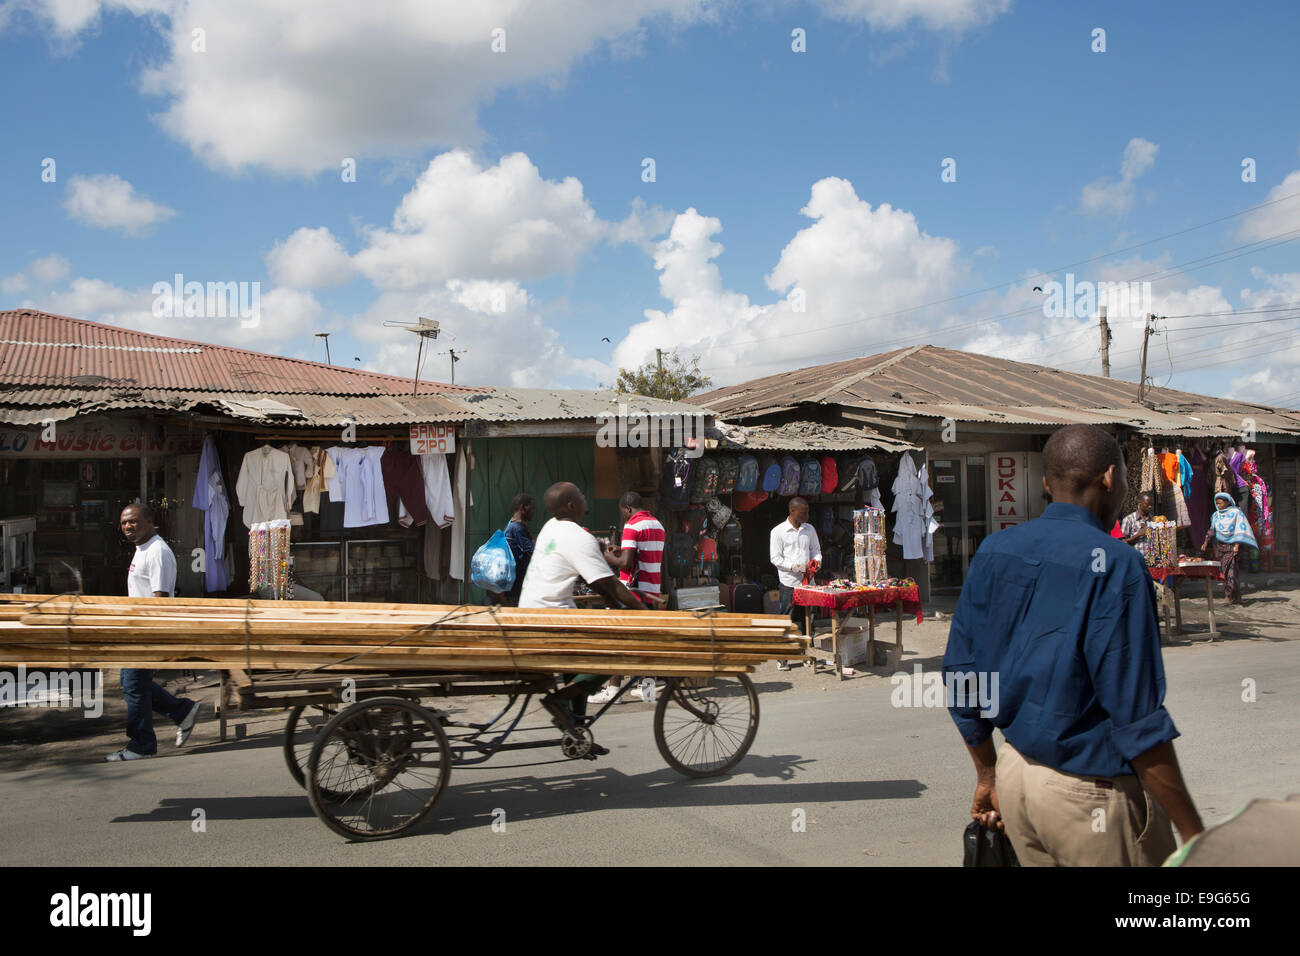 Beschäftigt Straßenszene in Dar Es Salaam, Tansania, Ostafrika. Stockfoto